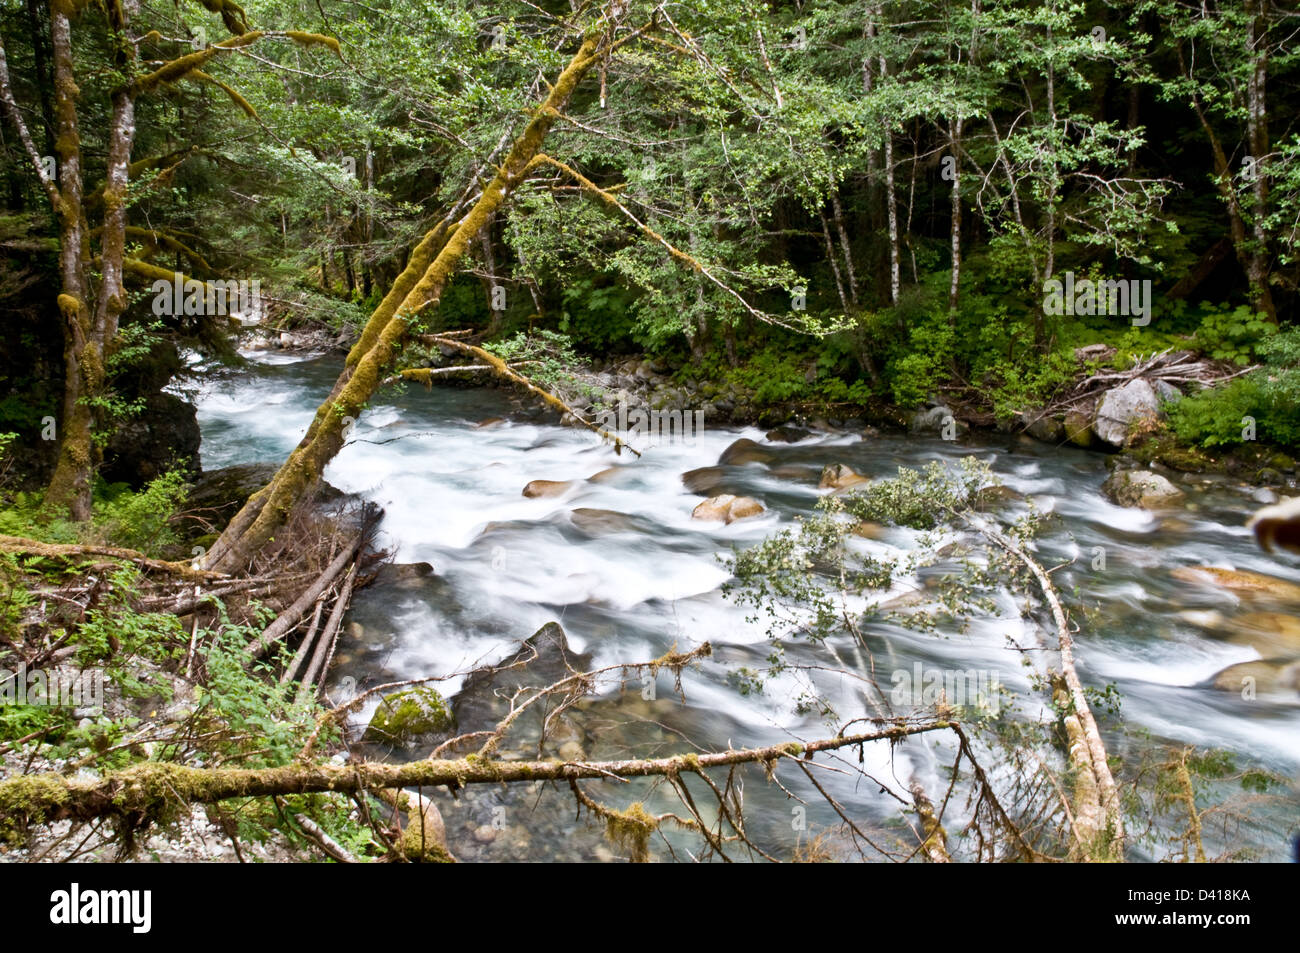 British columbia canada verdant creek hi-res stock photography and images -  Alamy